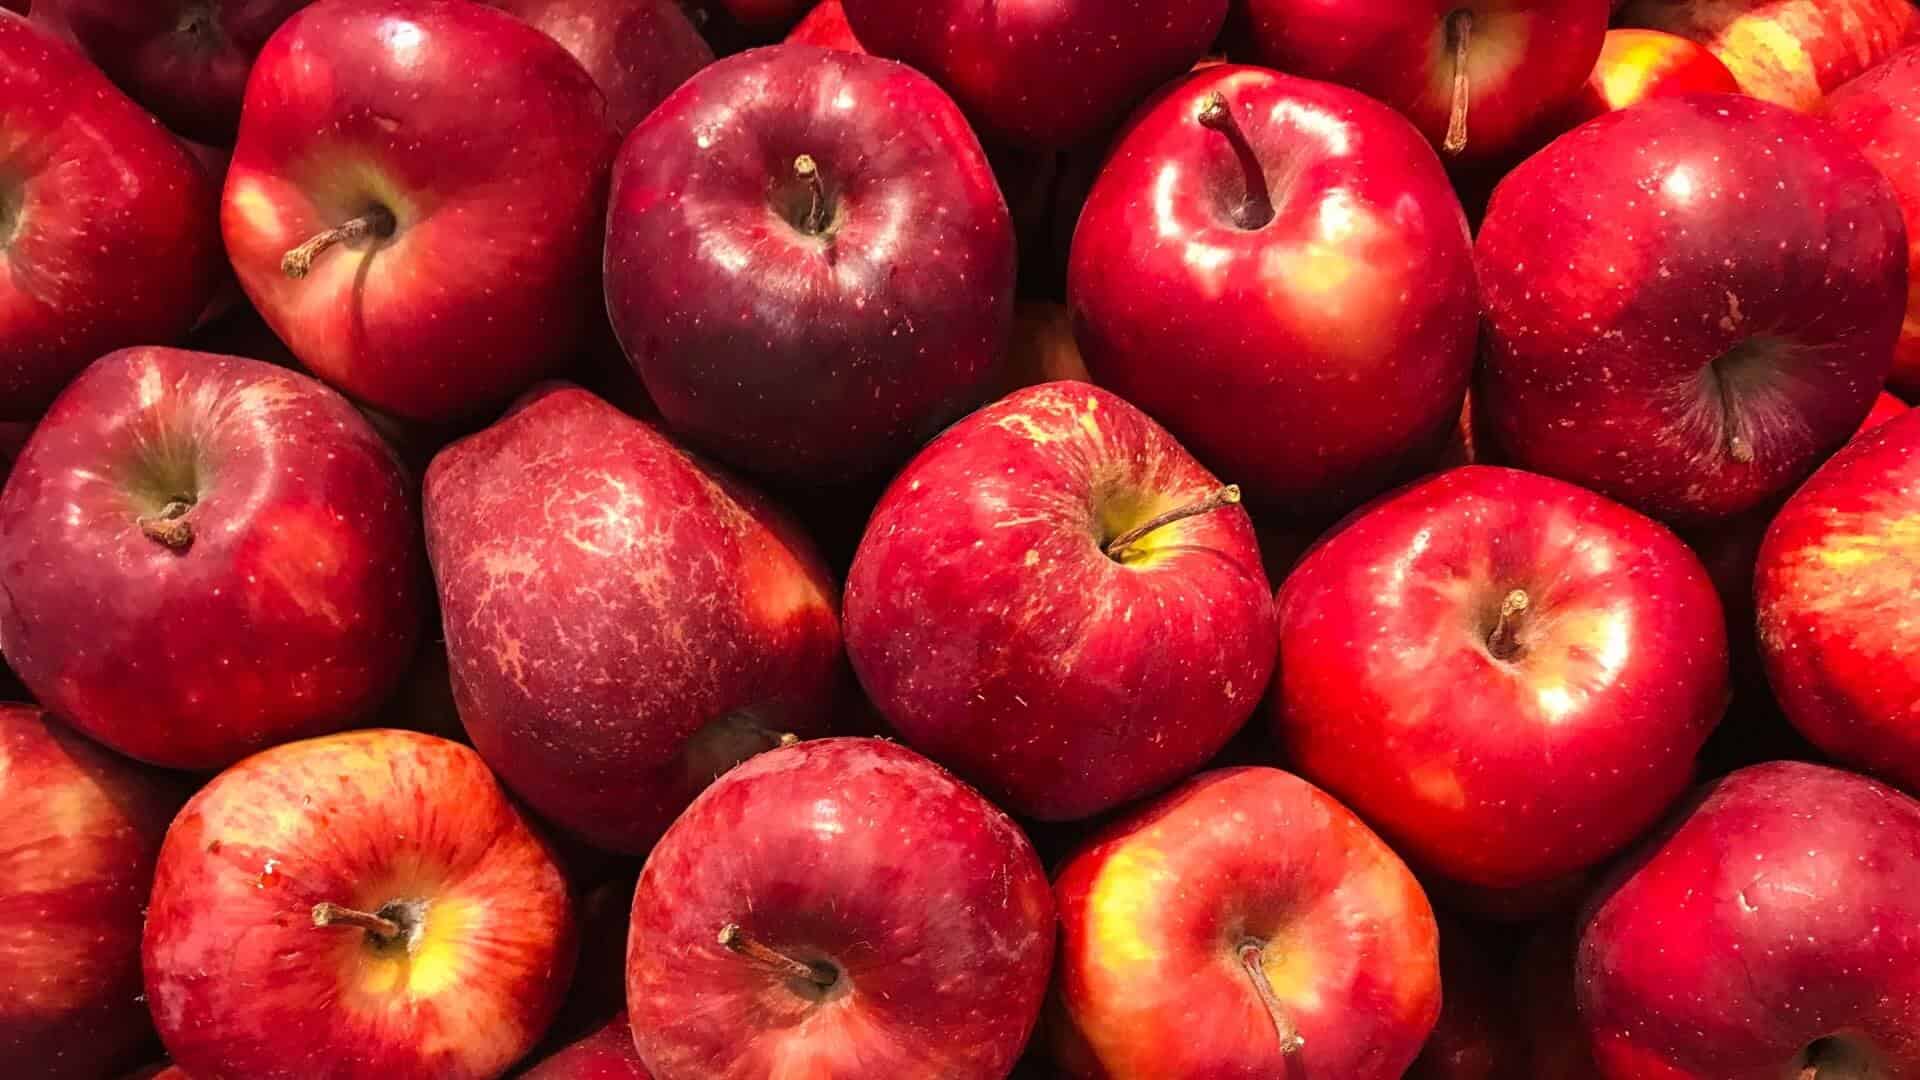 apples background image